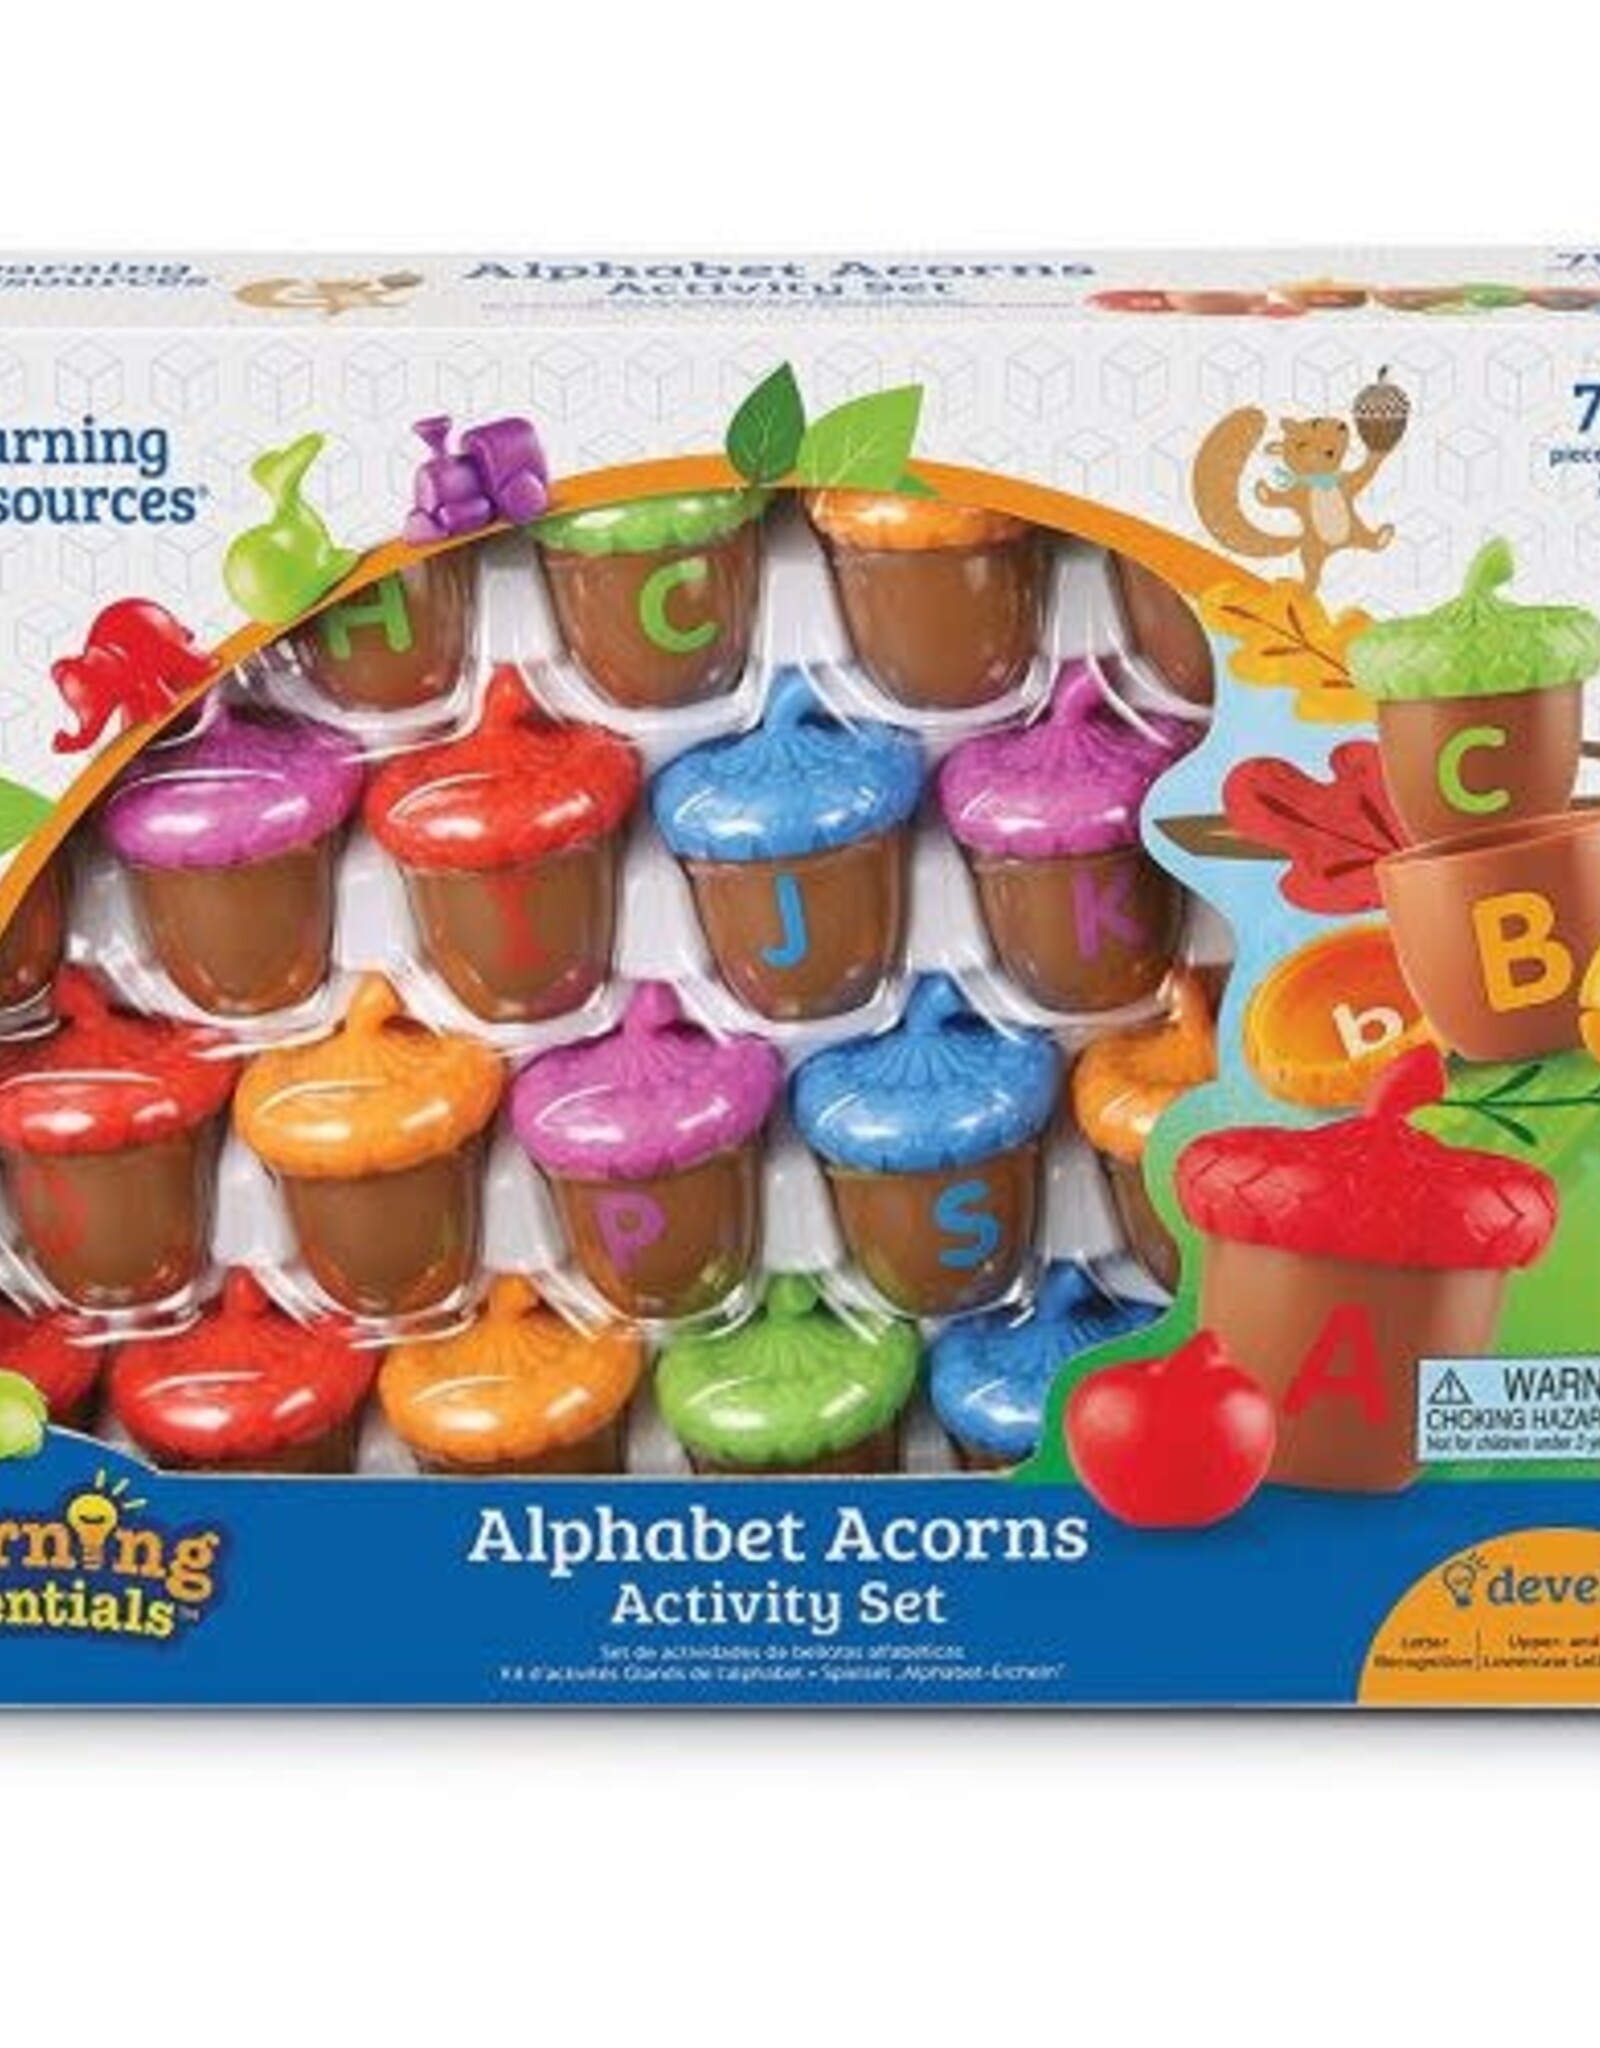 LEARNING RESOURCES Alphabet Acorns Activity Set